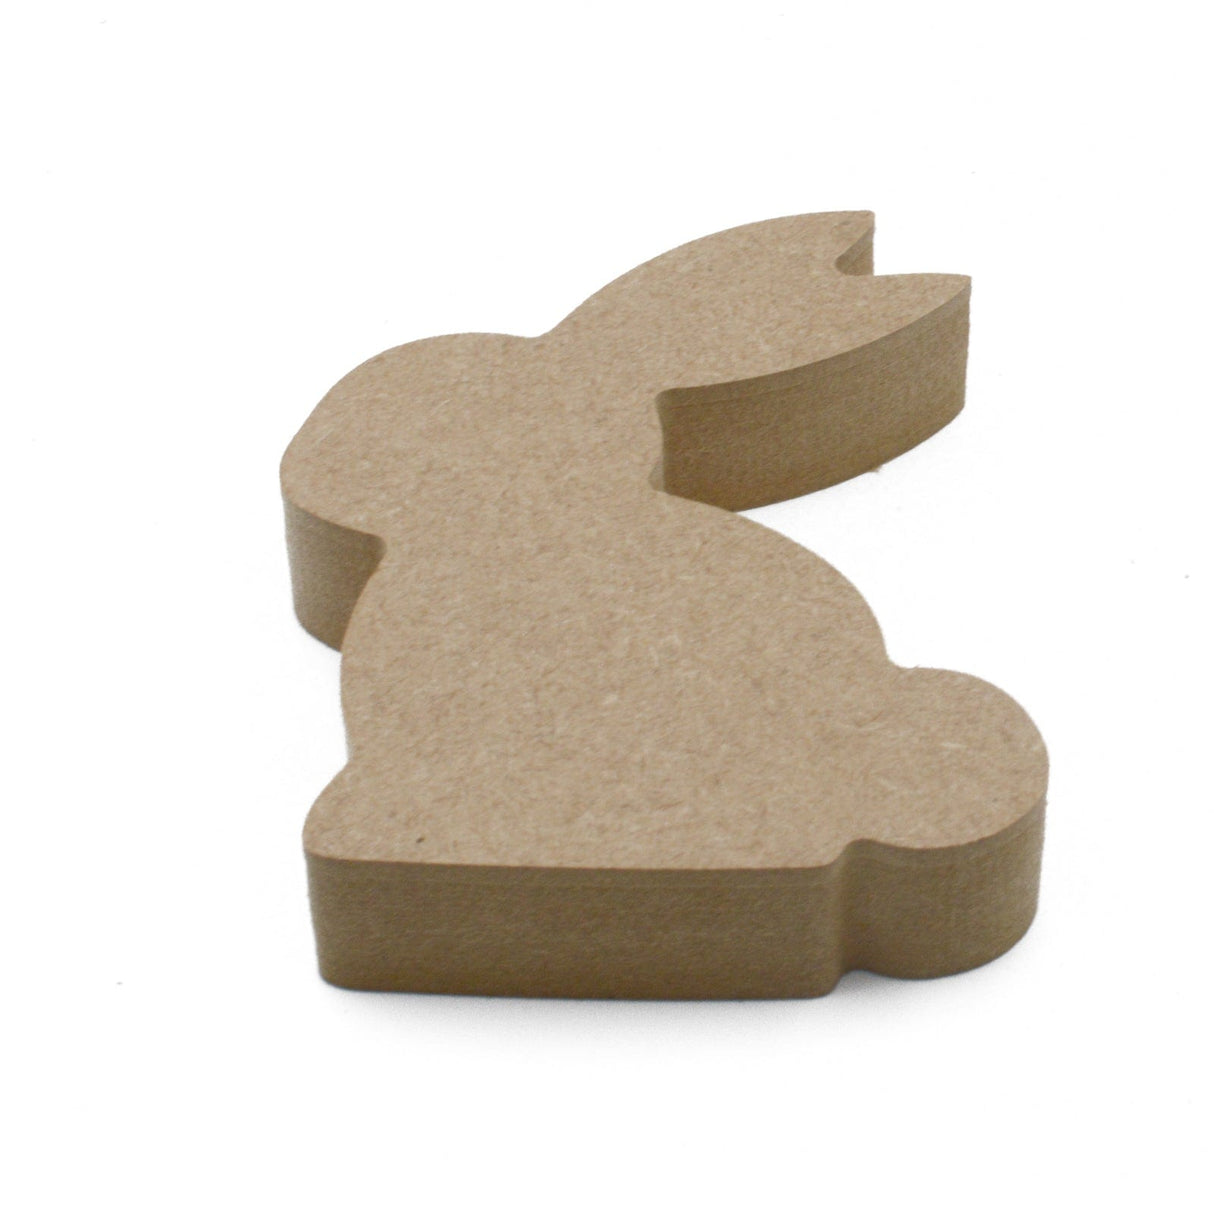 Freestanding Easter Bunny Rabbit Wooden Craft Shapes - Laserworksuk